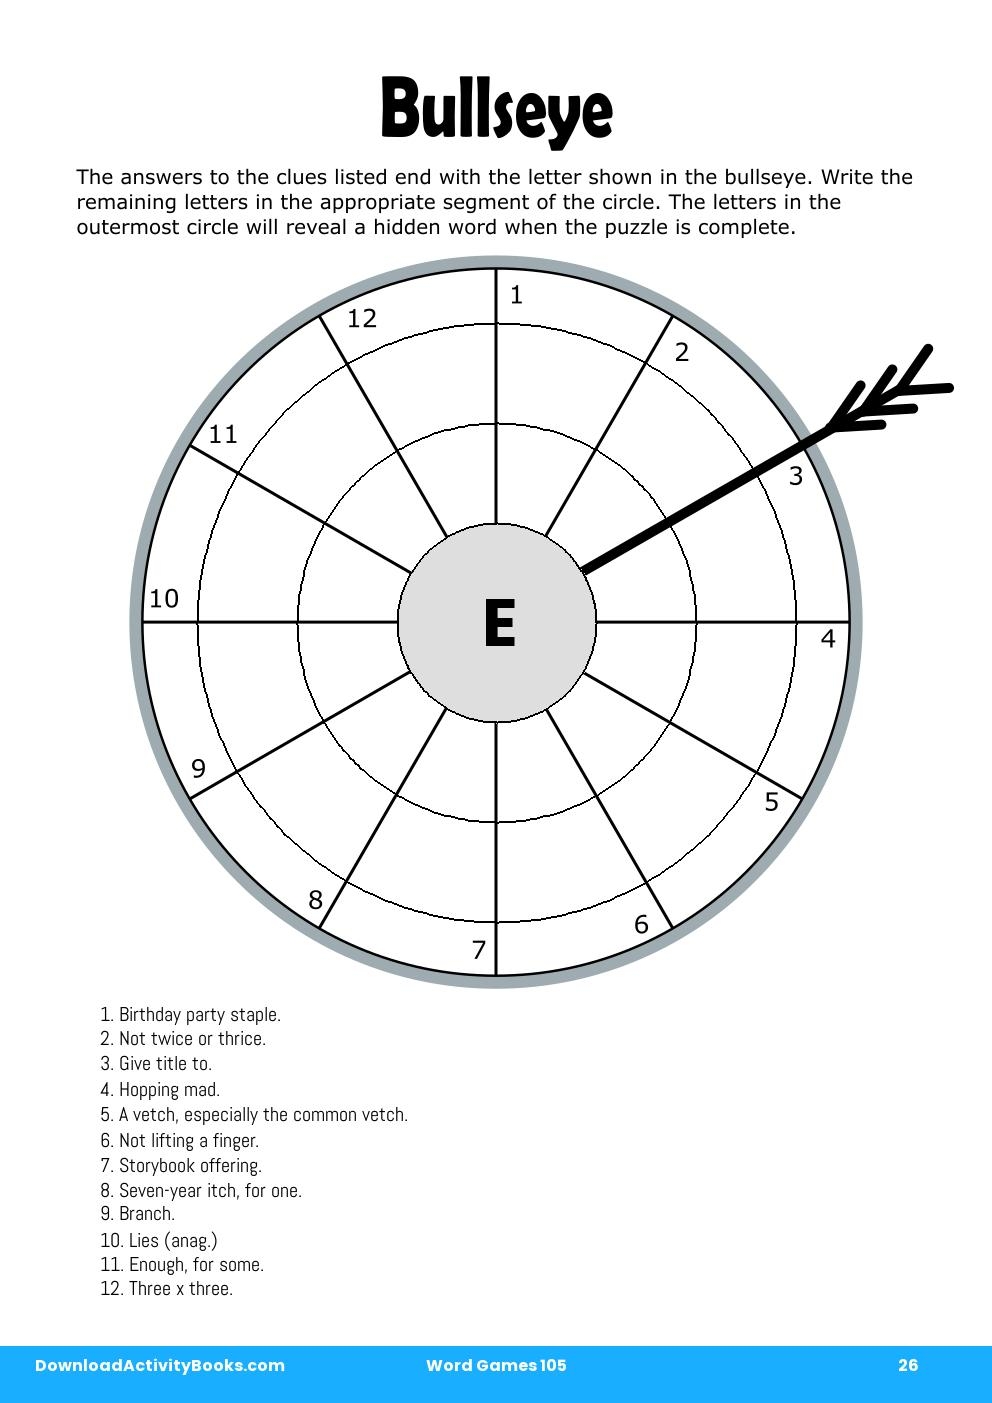 Bullseye in Word Games 105